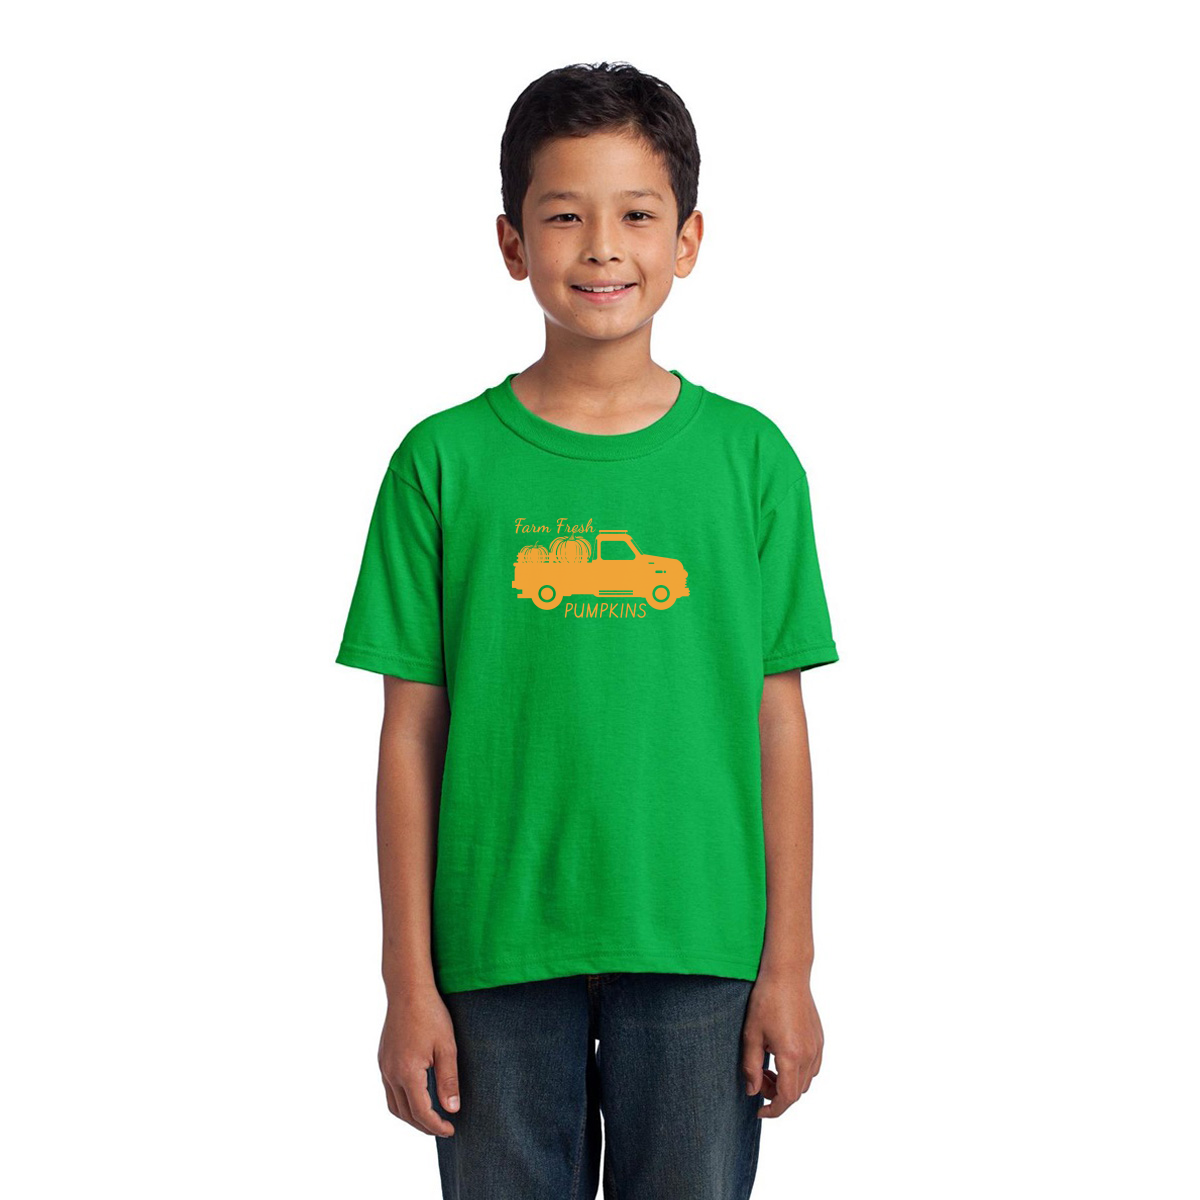 Farm Fresh Pumpkins Kids T-shirt | Green